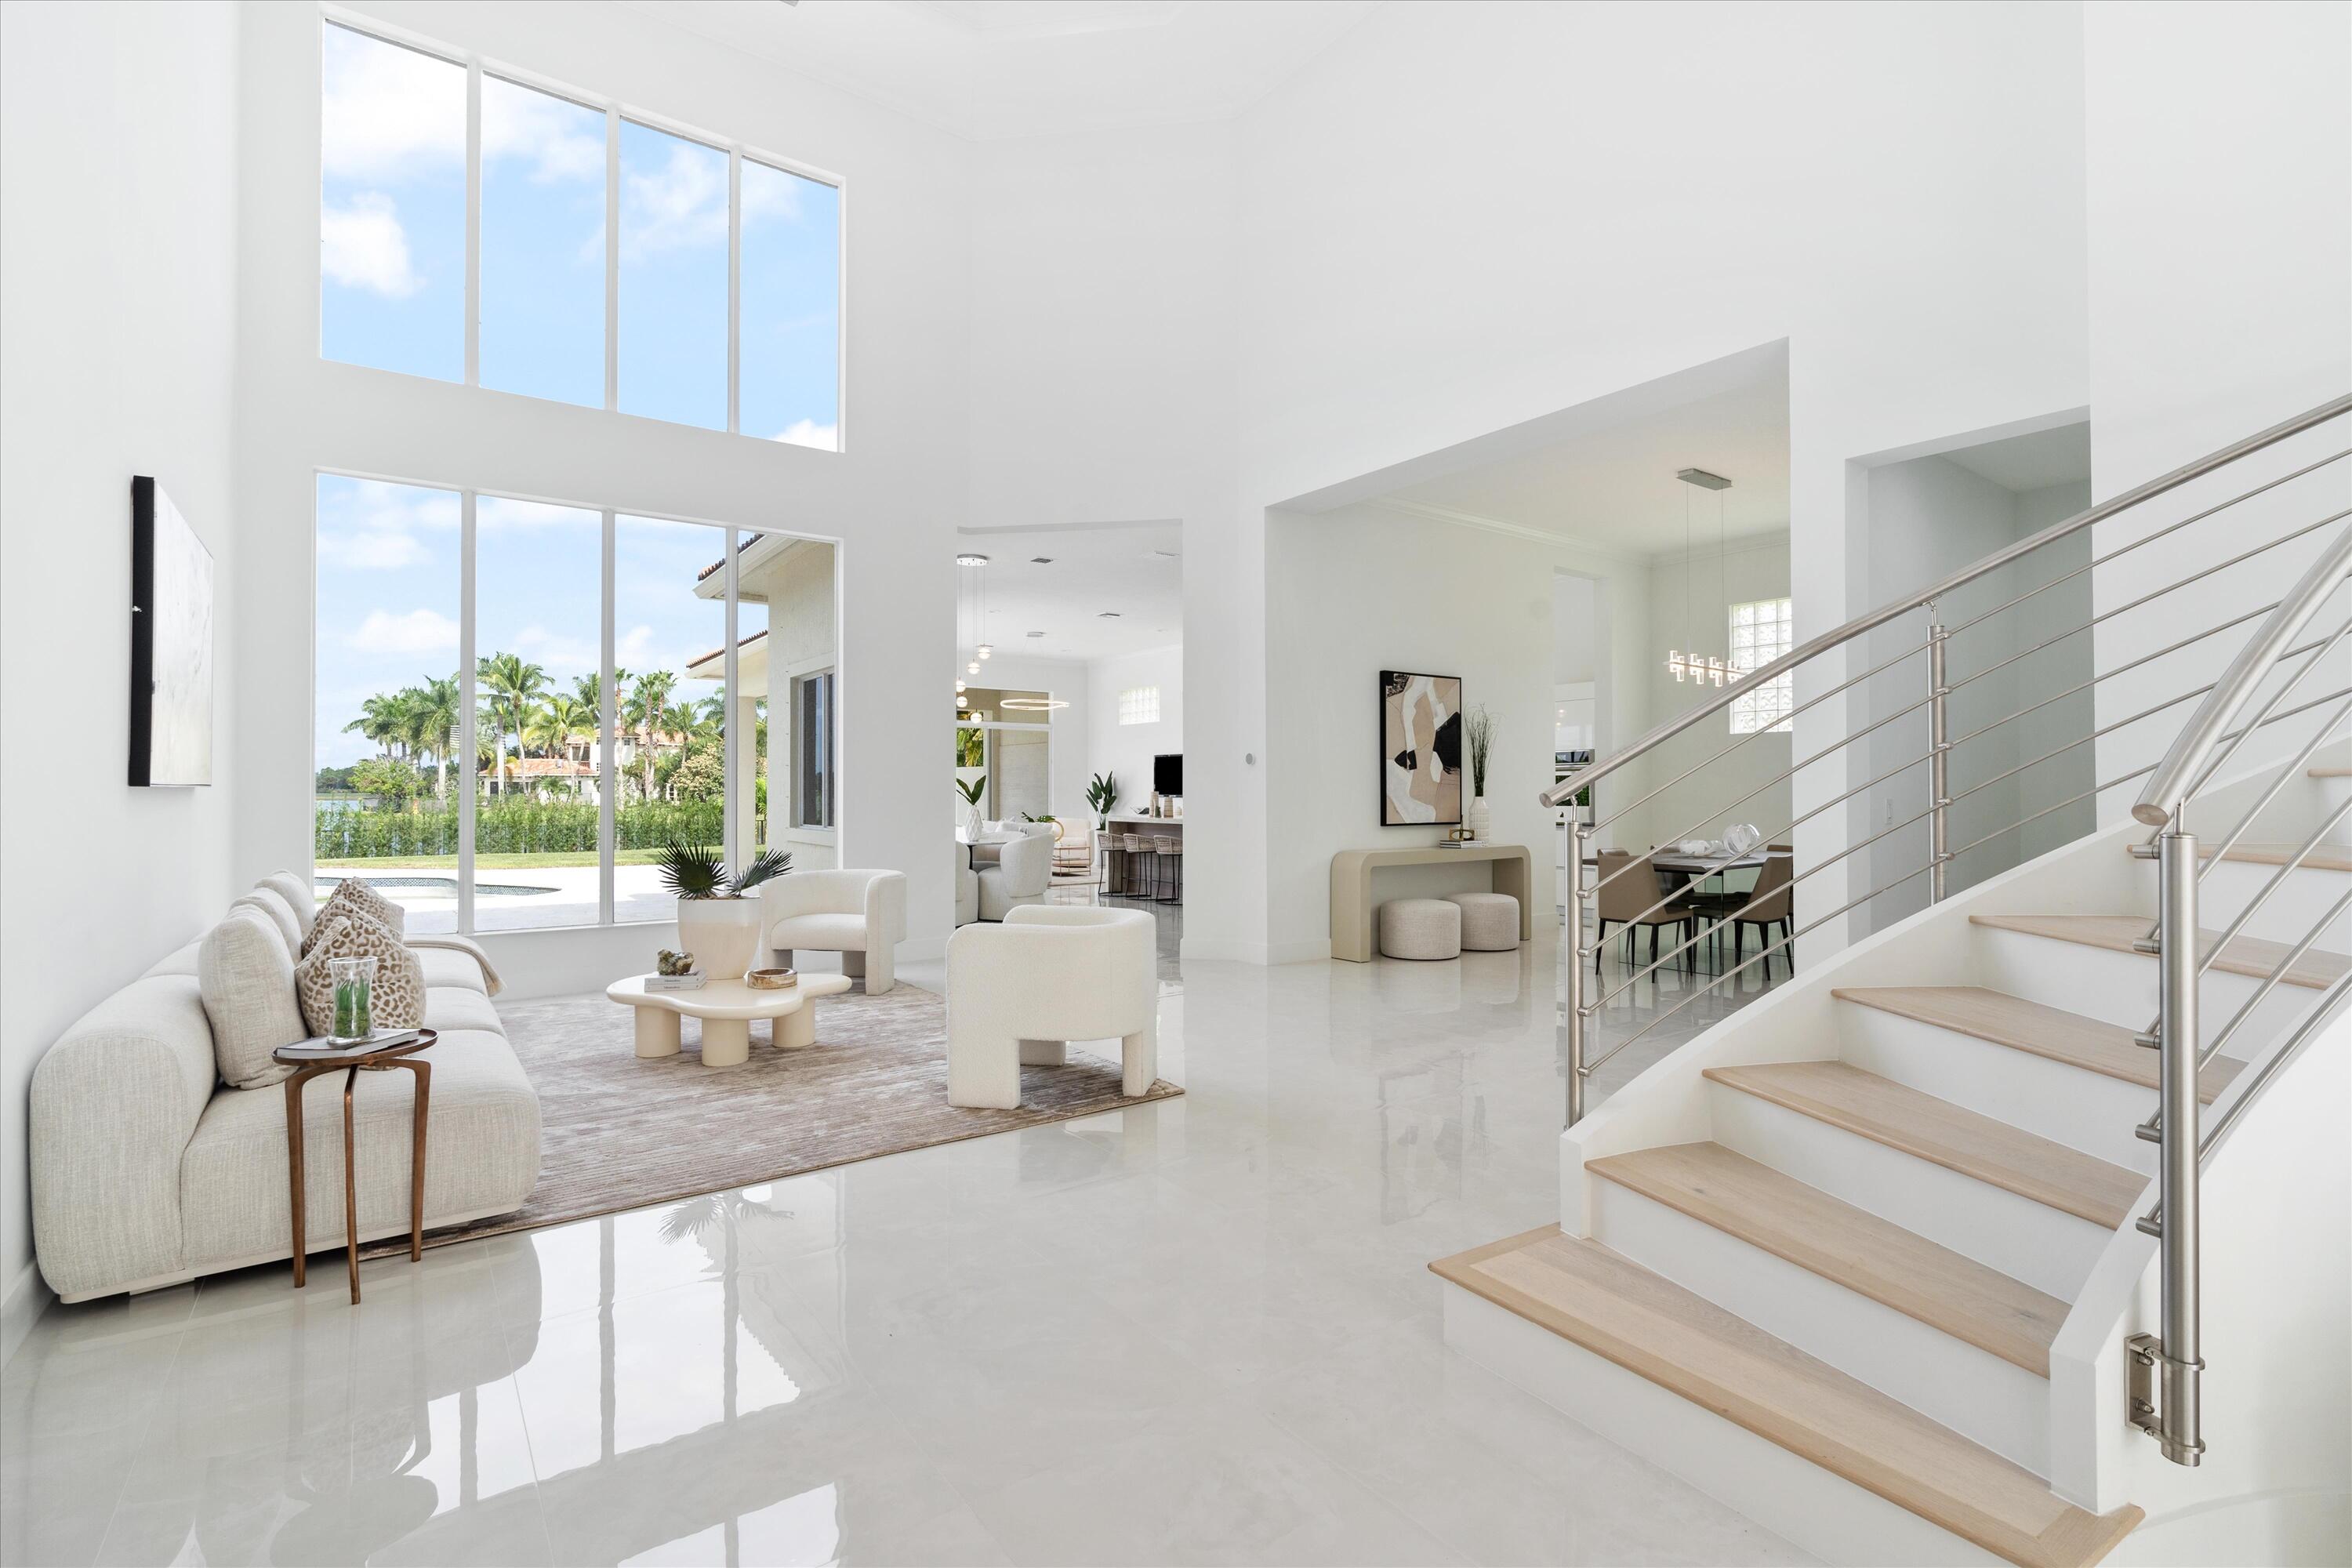 10567 Hollow Bay Terrace, West Palm Beach, Palm Beach County, Florida - 4 Bedrooms  
4.5 Bathrooms - 